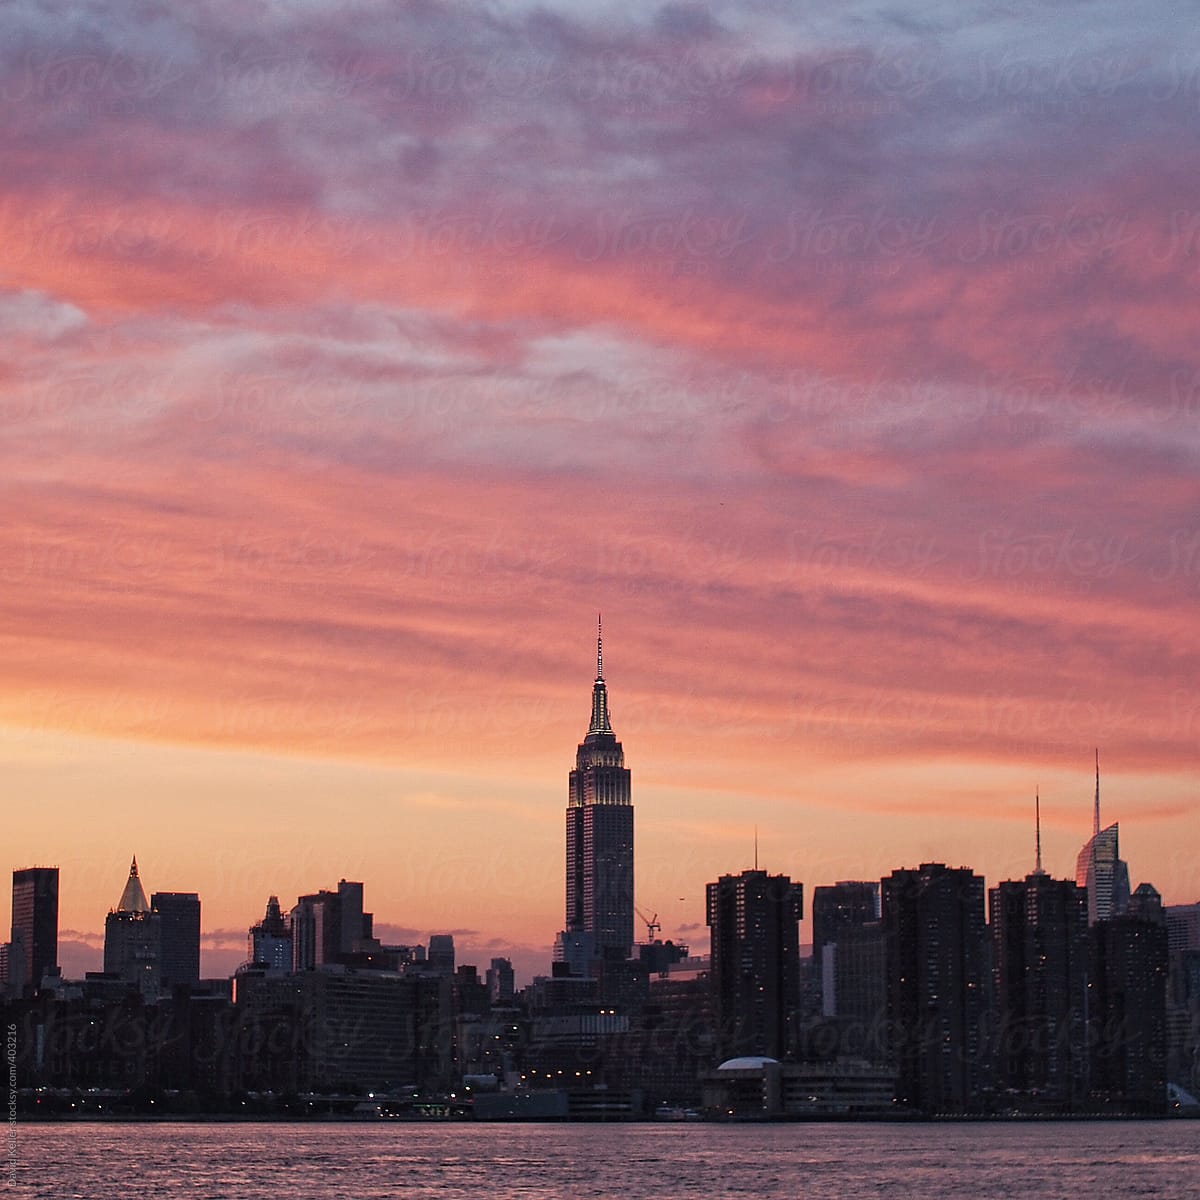 A New York City Sunset